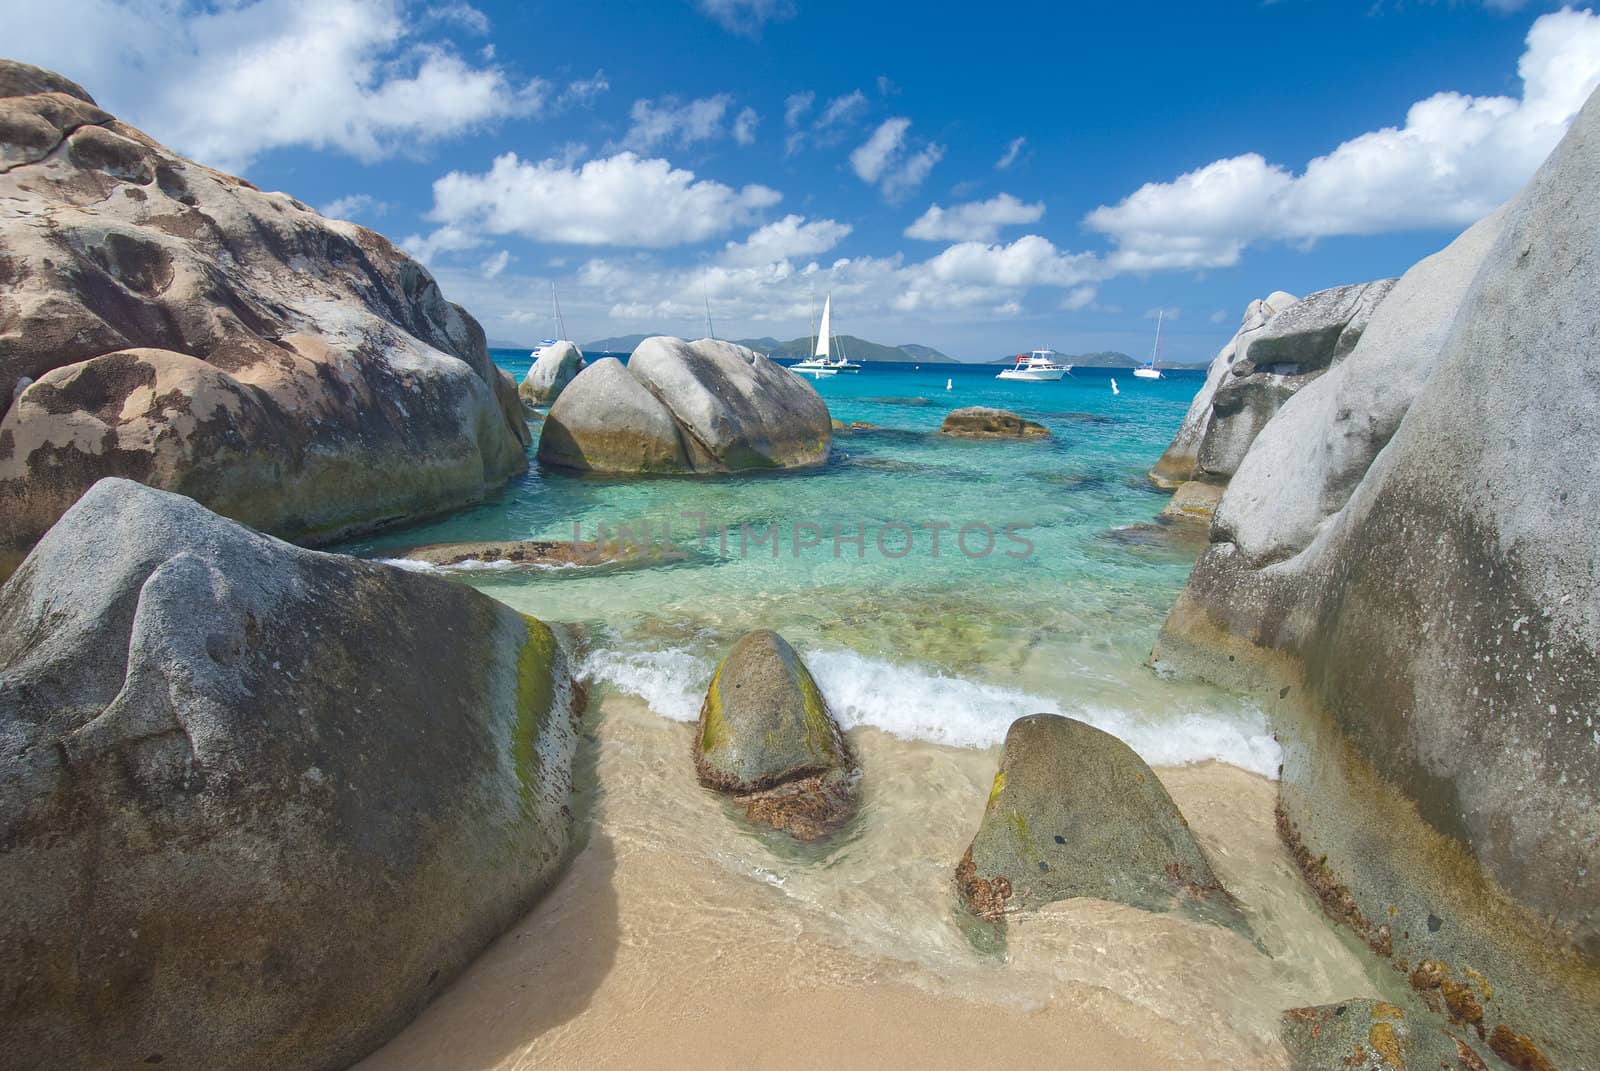 The famous Baths on Virgin Gorda, British Virgin Islands